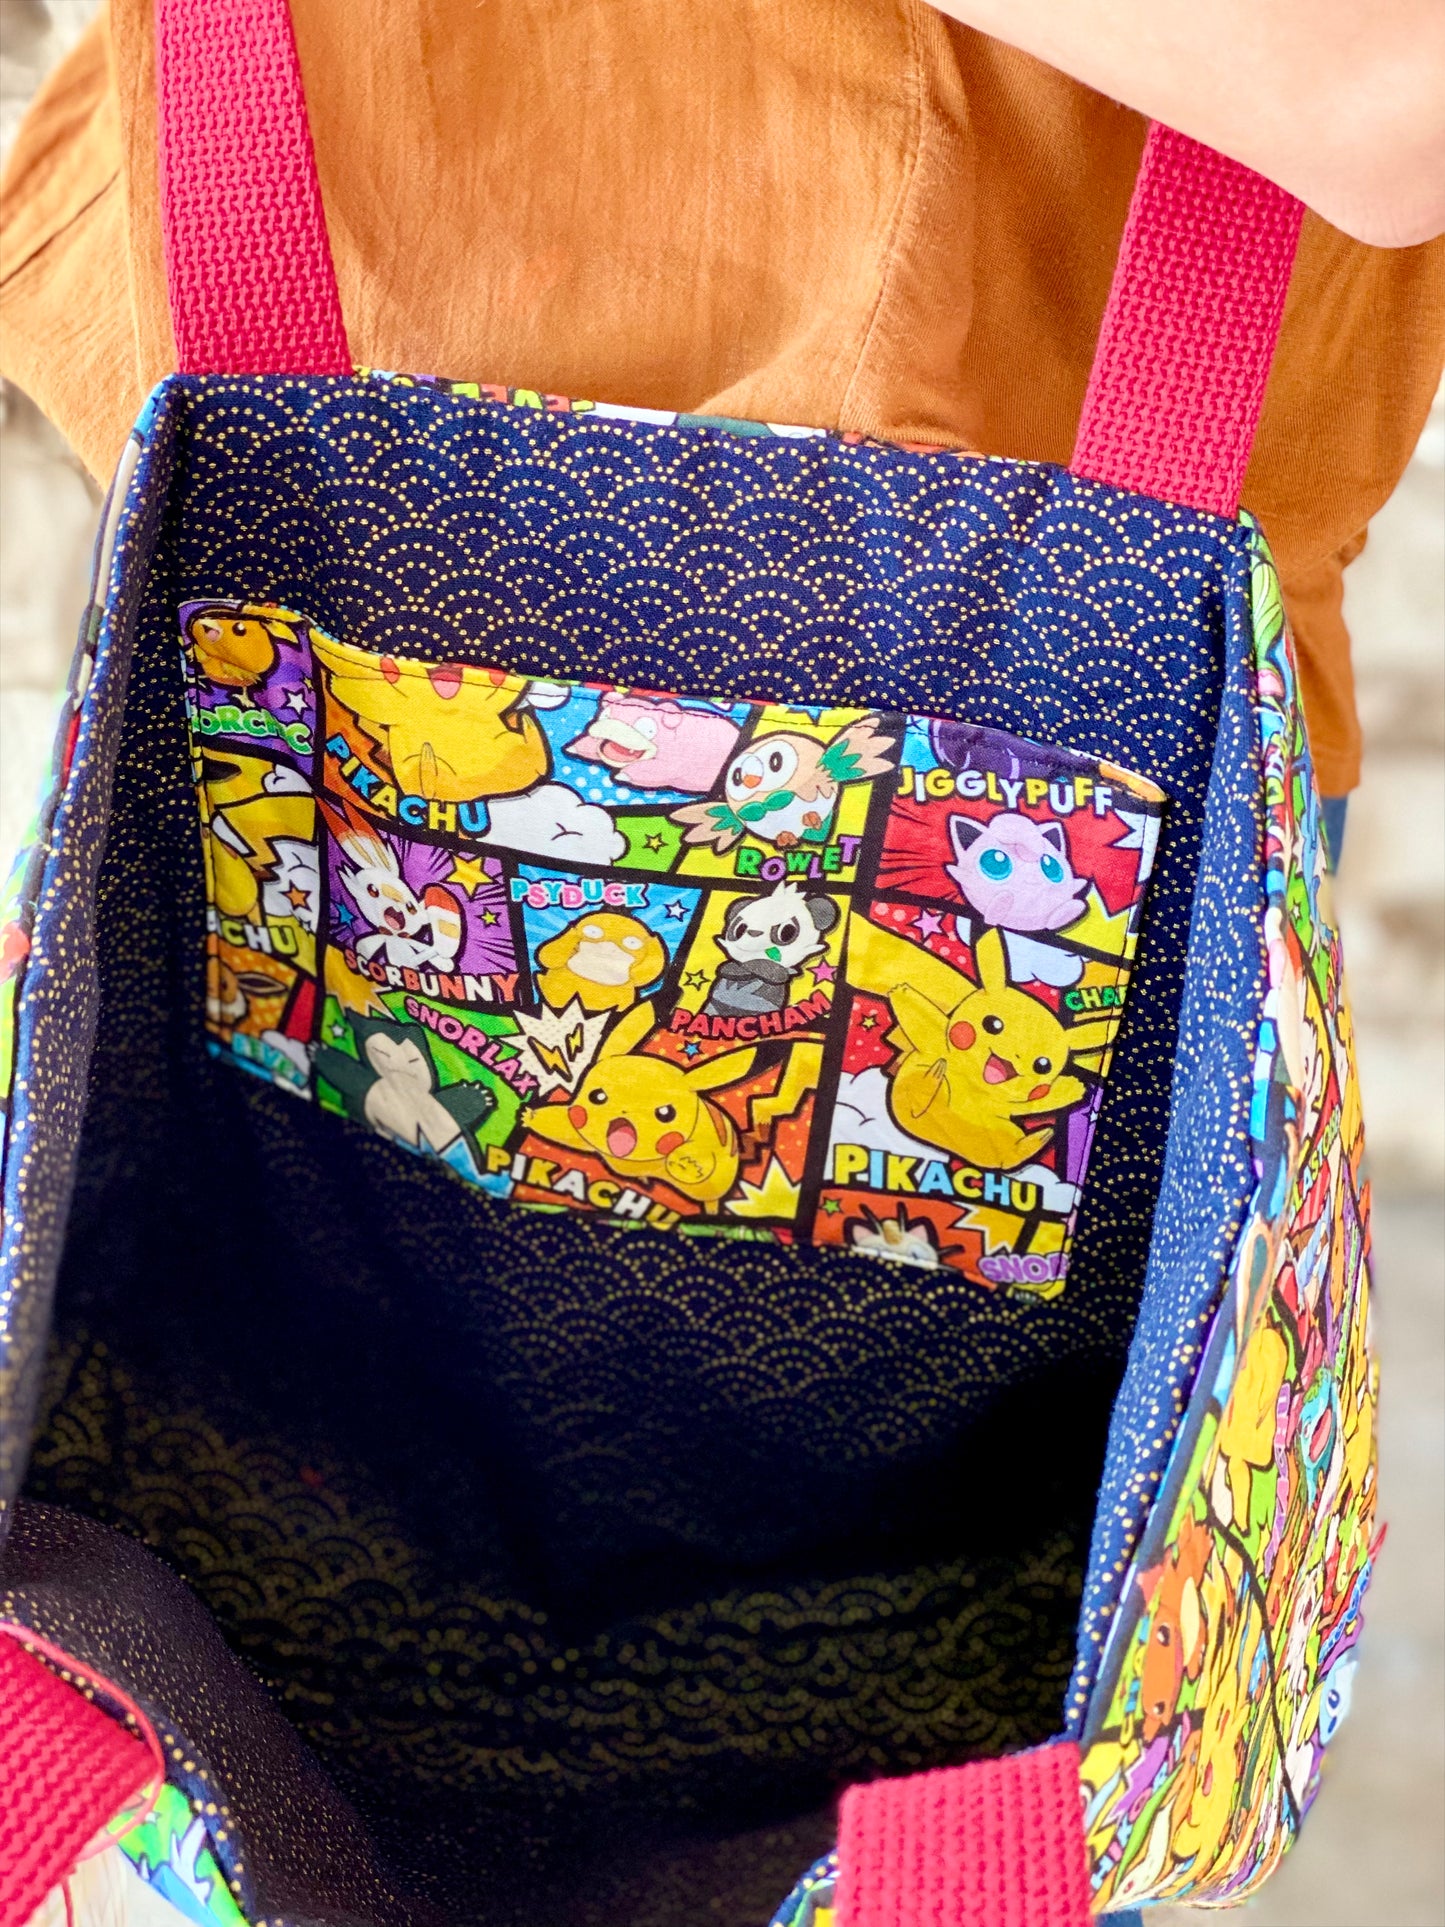 Kaiju Cut and Sew Pika! Large Cloth Tote Bag with Interior Snap Pocket | Handmade in Austin Texas